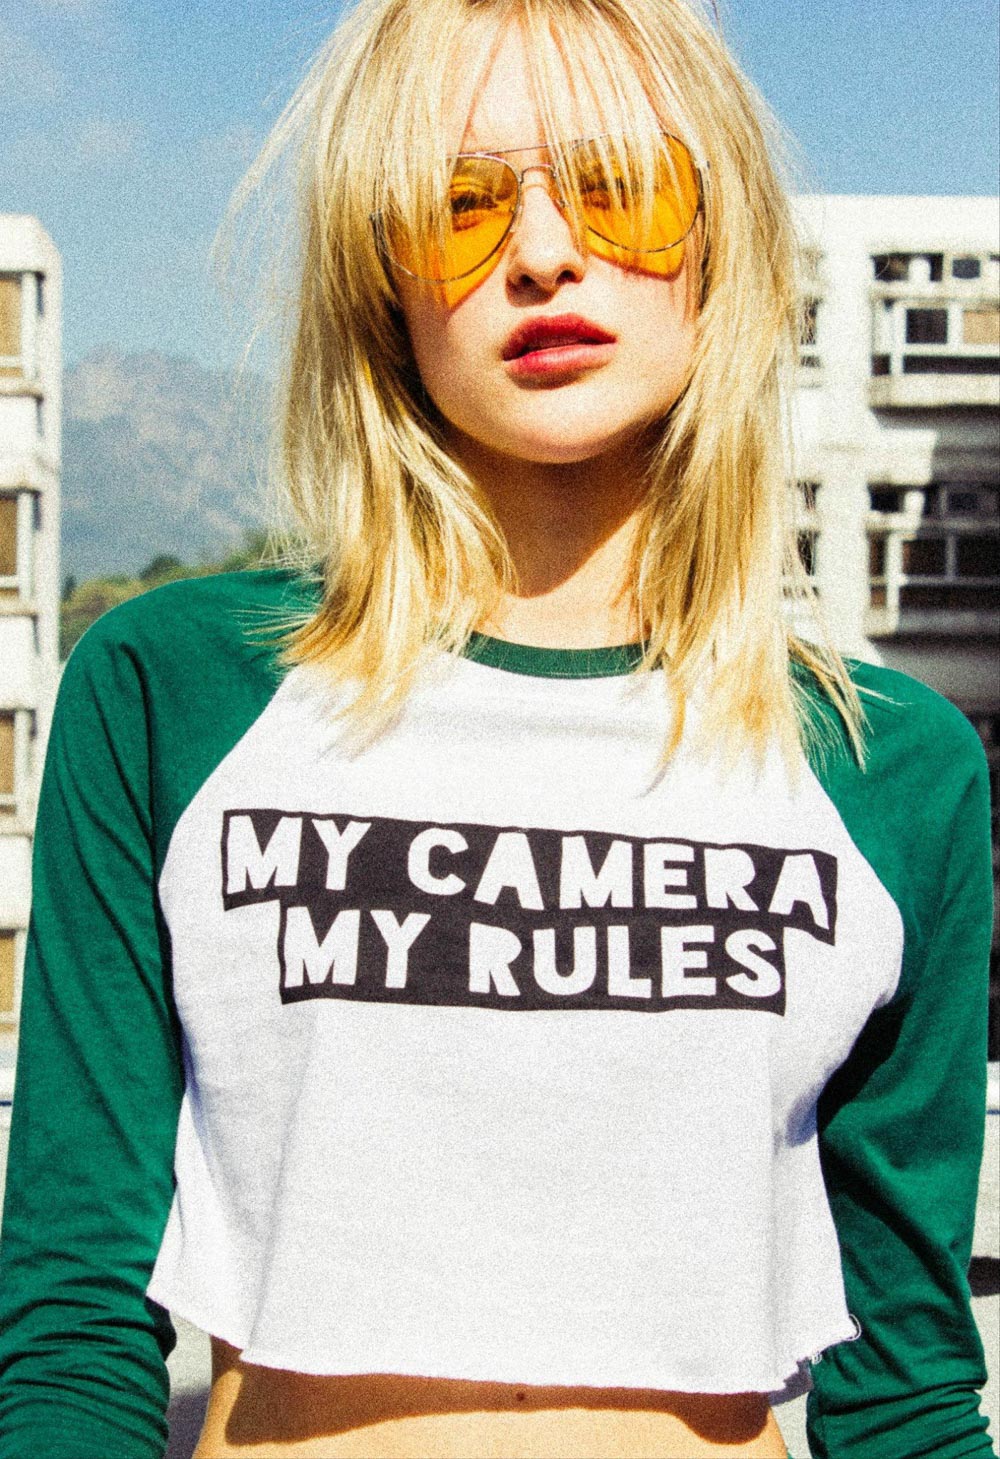 My camera my rules